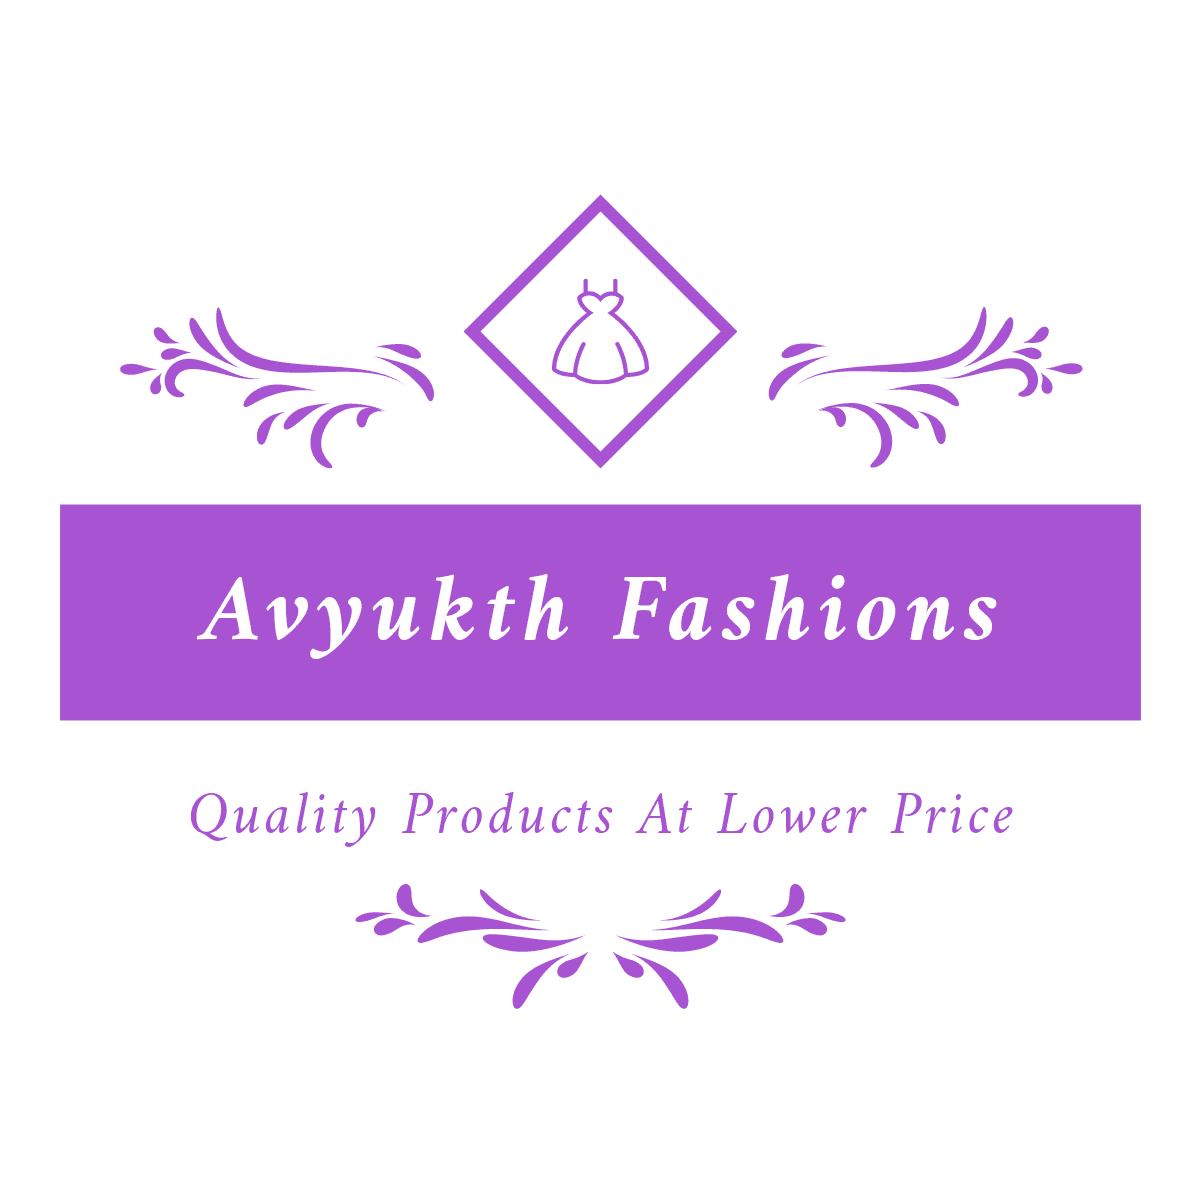 Avyukth Fashions